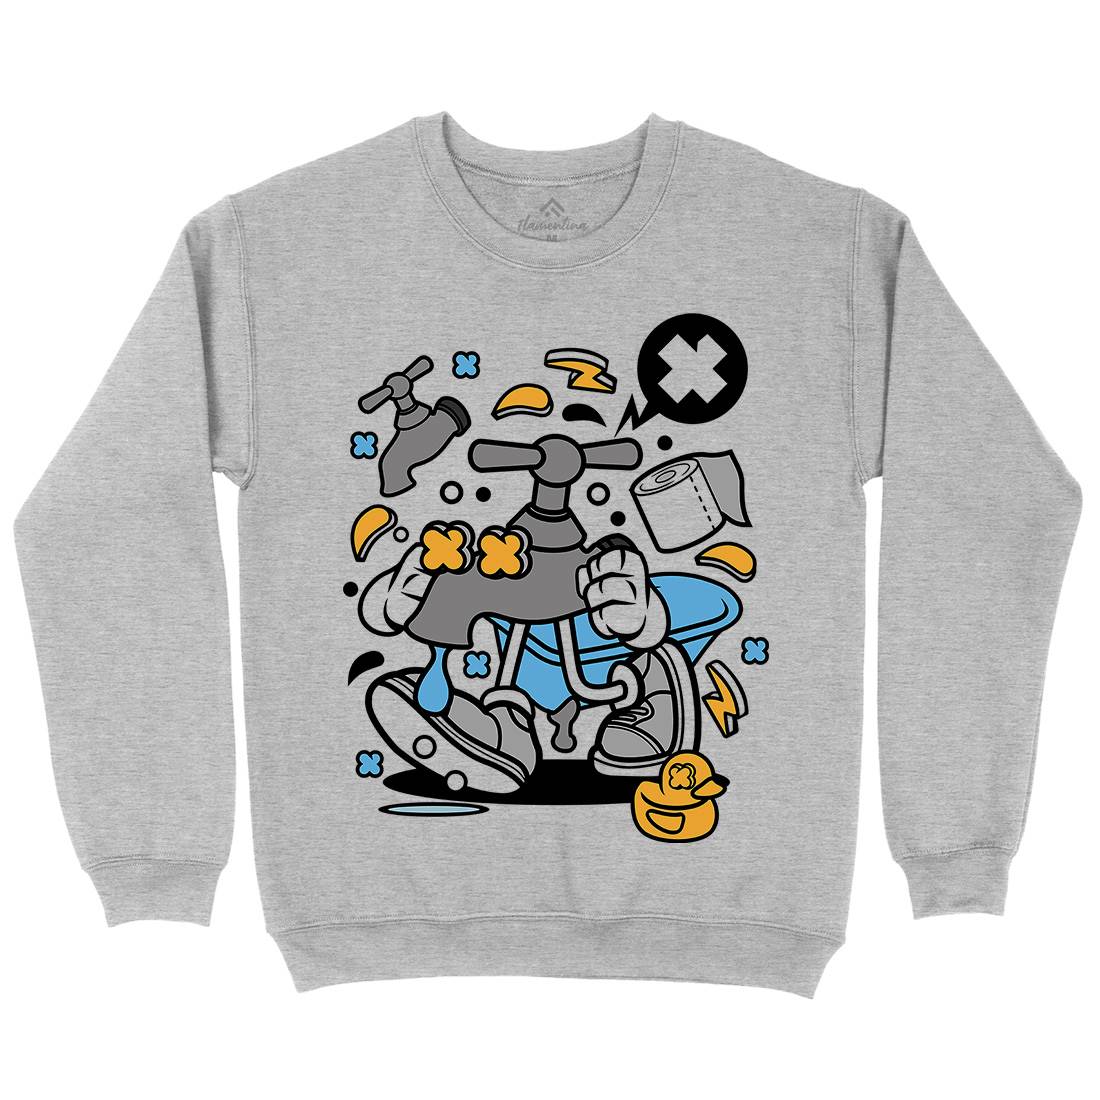 Faucet Kids Crew Neck Sweatshirt Retro C546